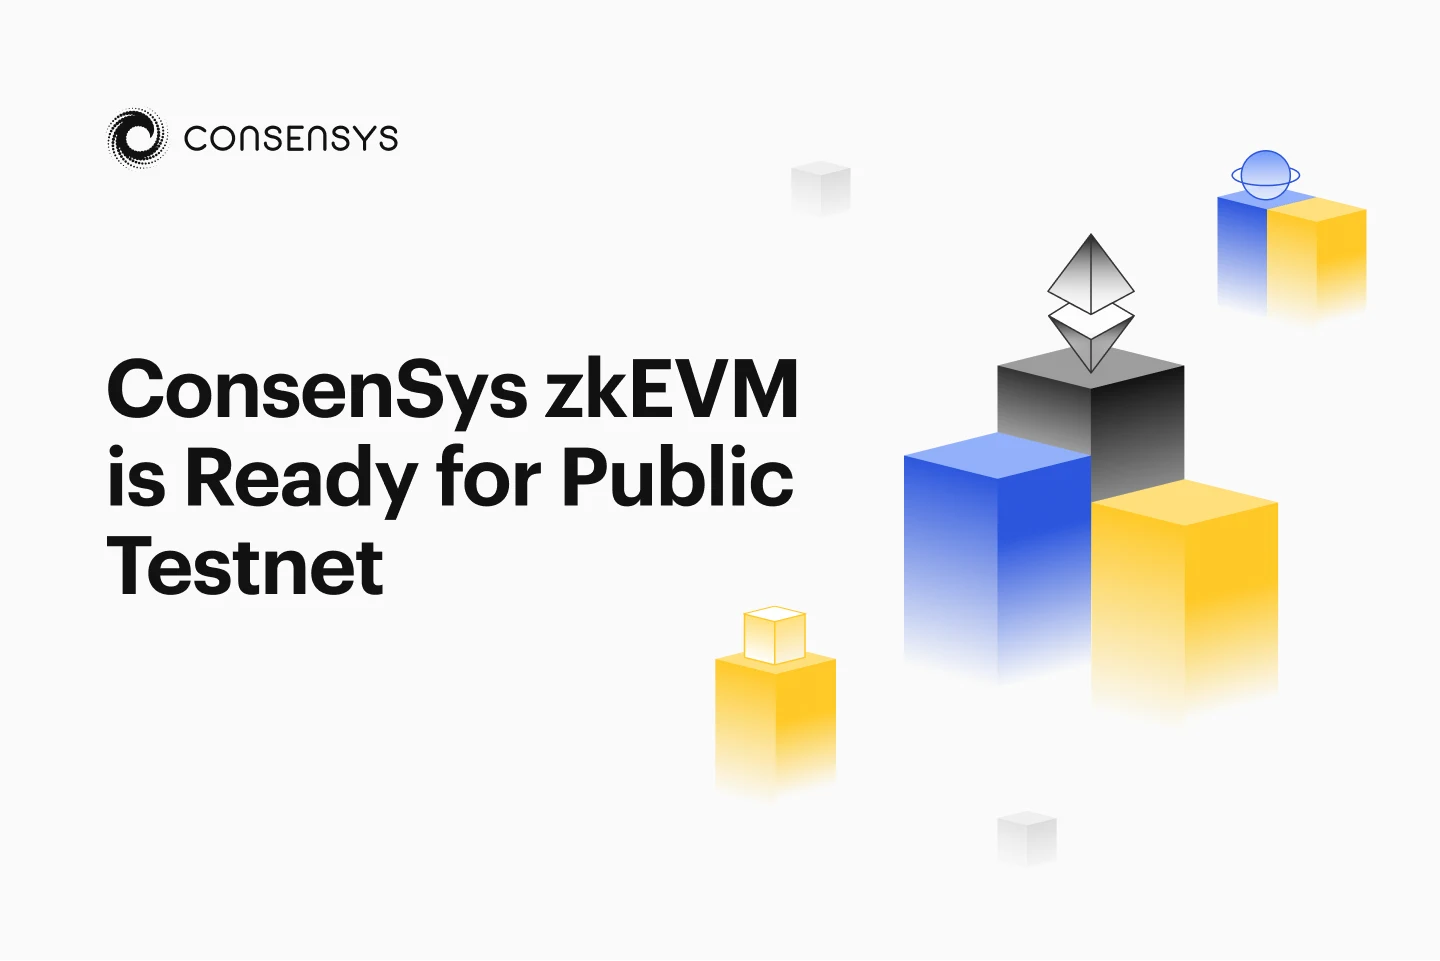 Image: Consensys zkEVM is Ready for Public Testnet